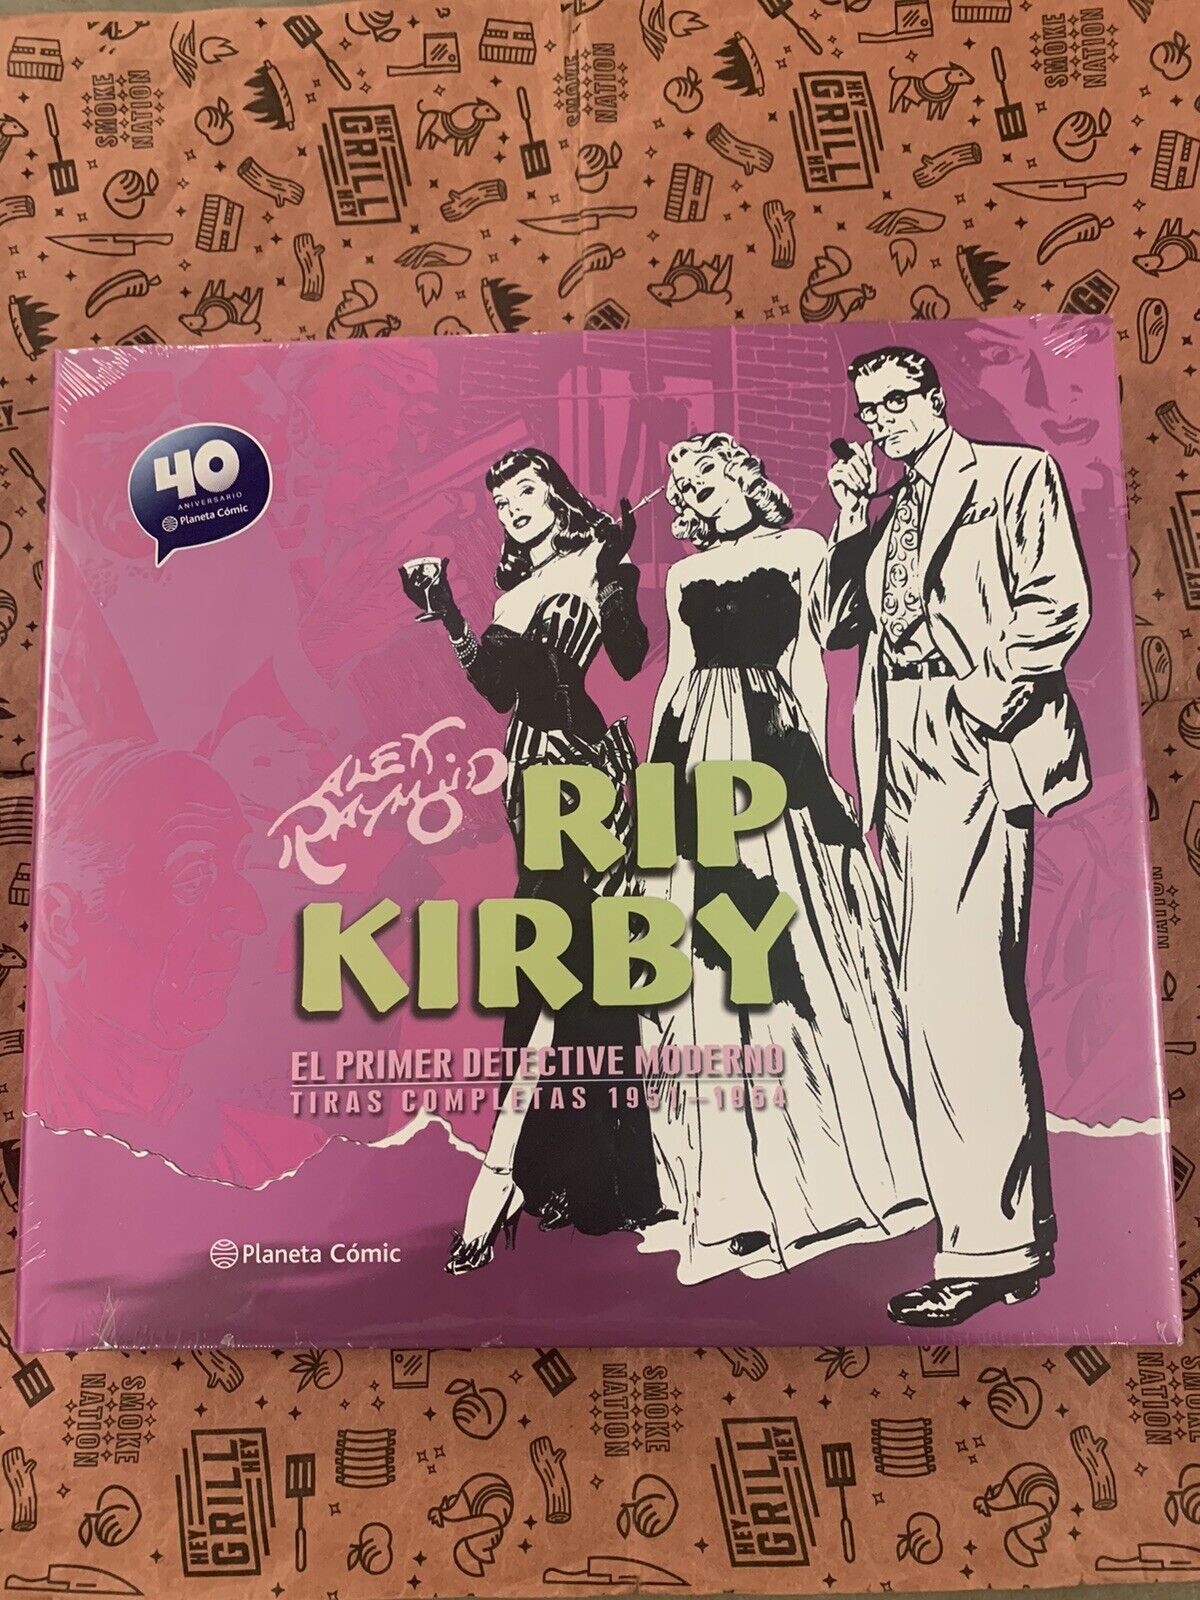 Rip Kirby: El primer detective moderno. Tiras completas 1951-1954 (hardcover)